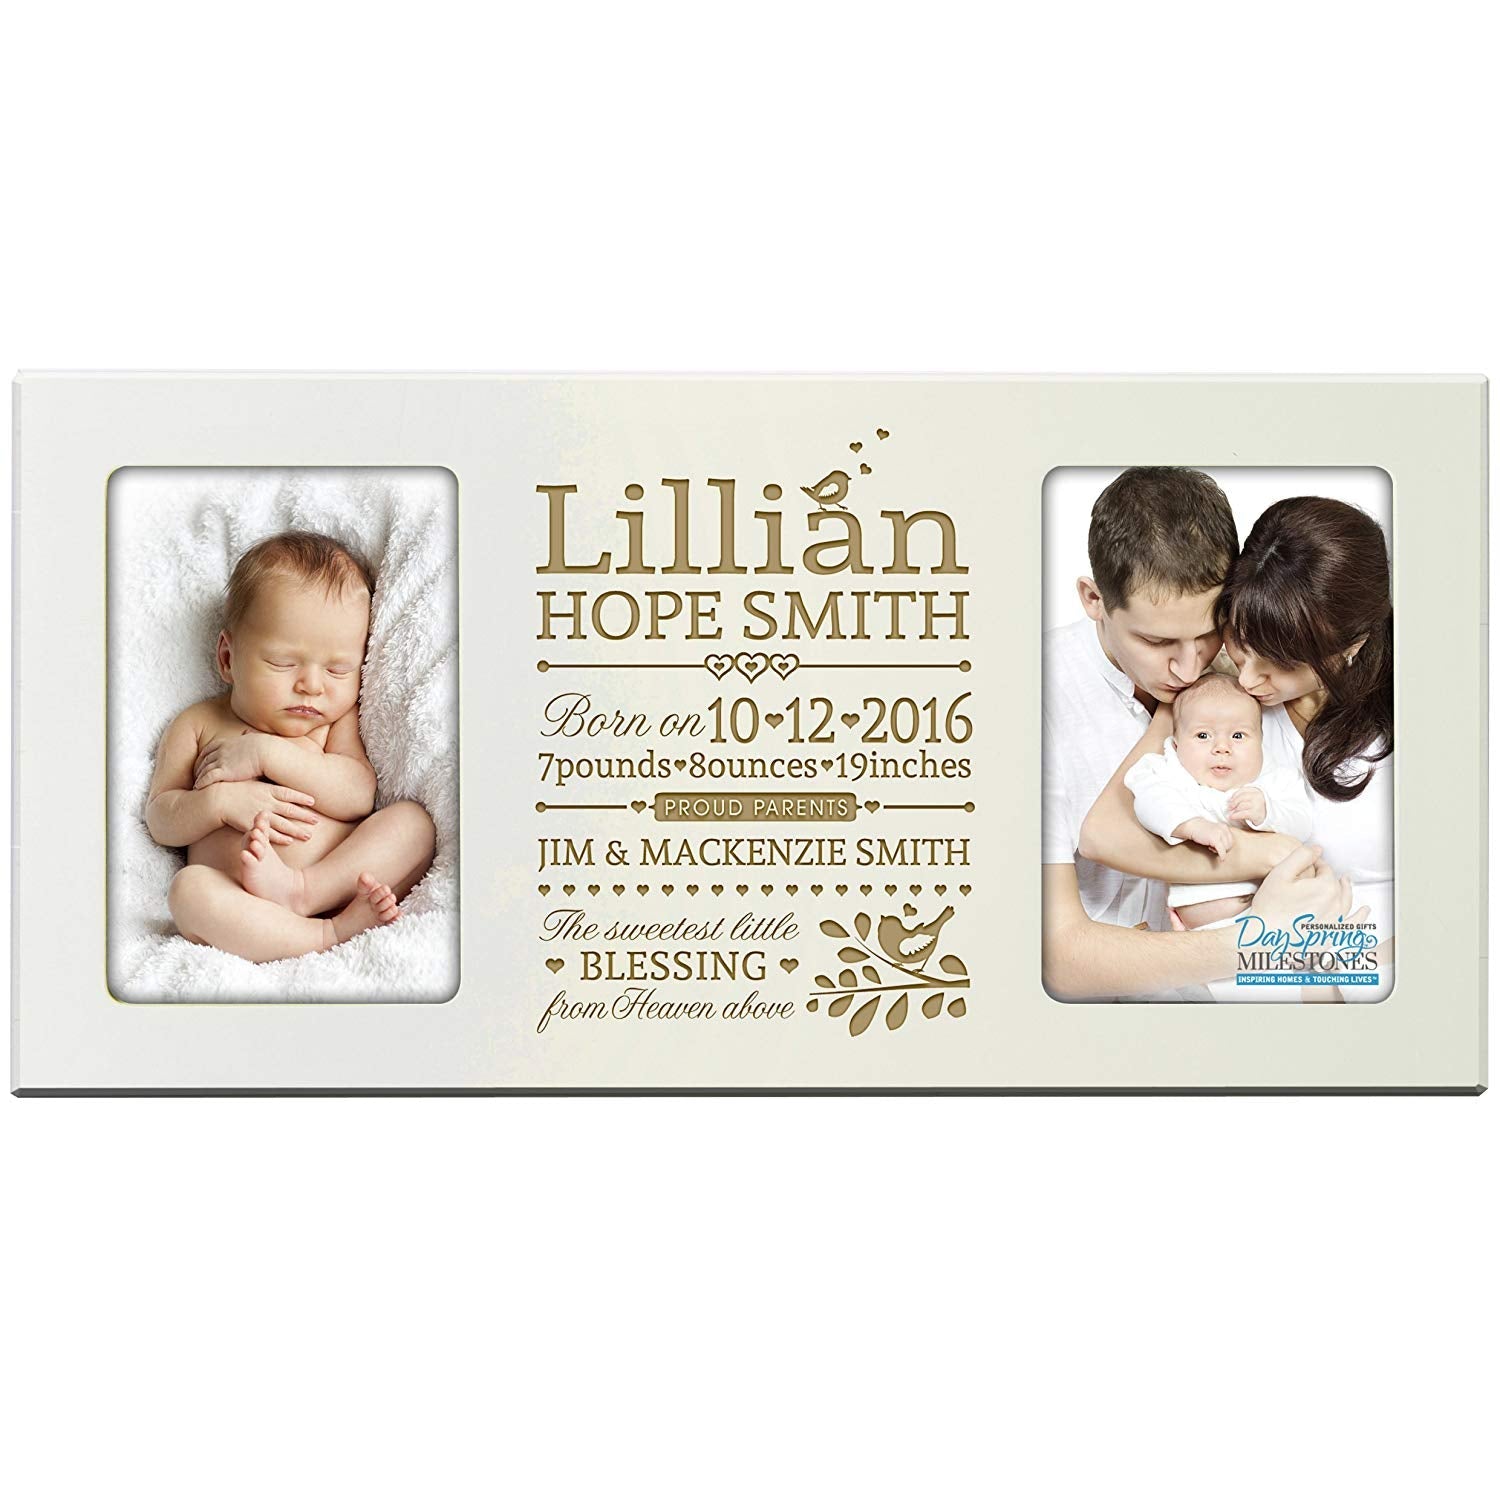 Personalized Baby Engraved Ivory Double Photo Frame - Worth The Wait - LifeSong Milestones